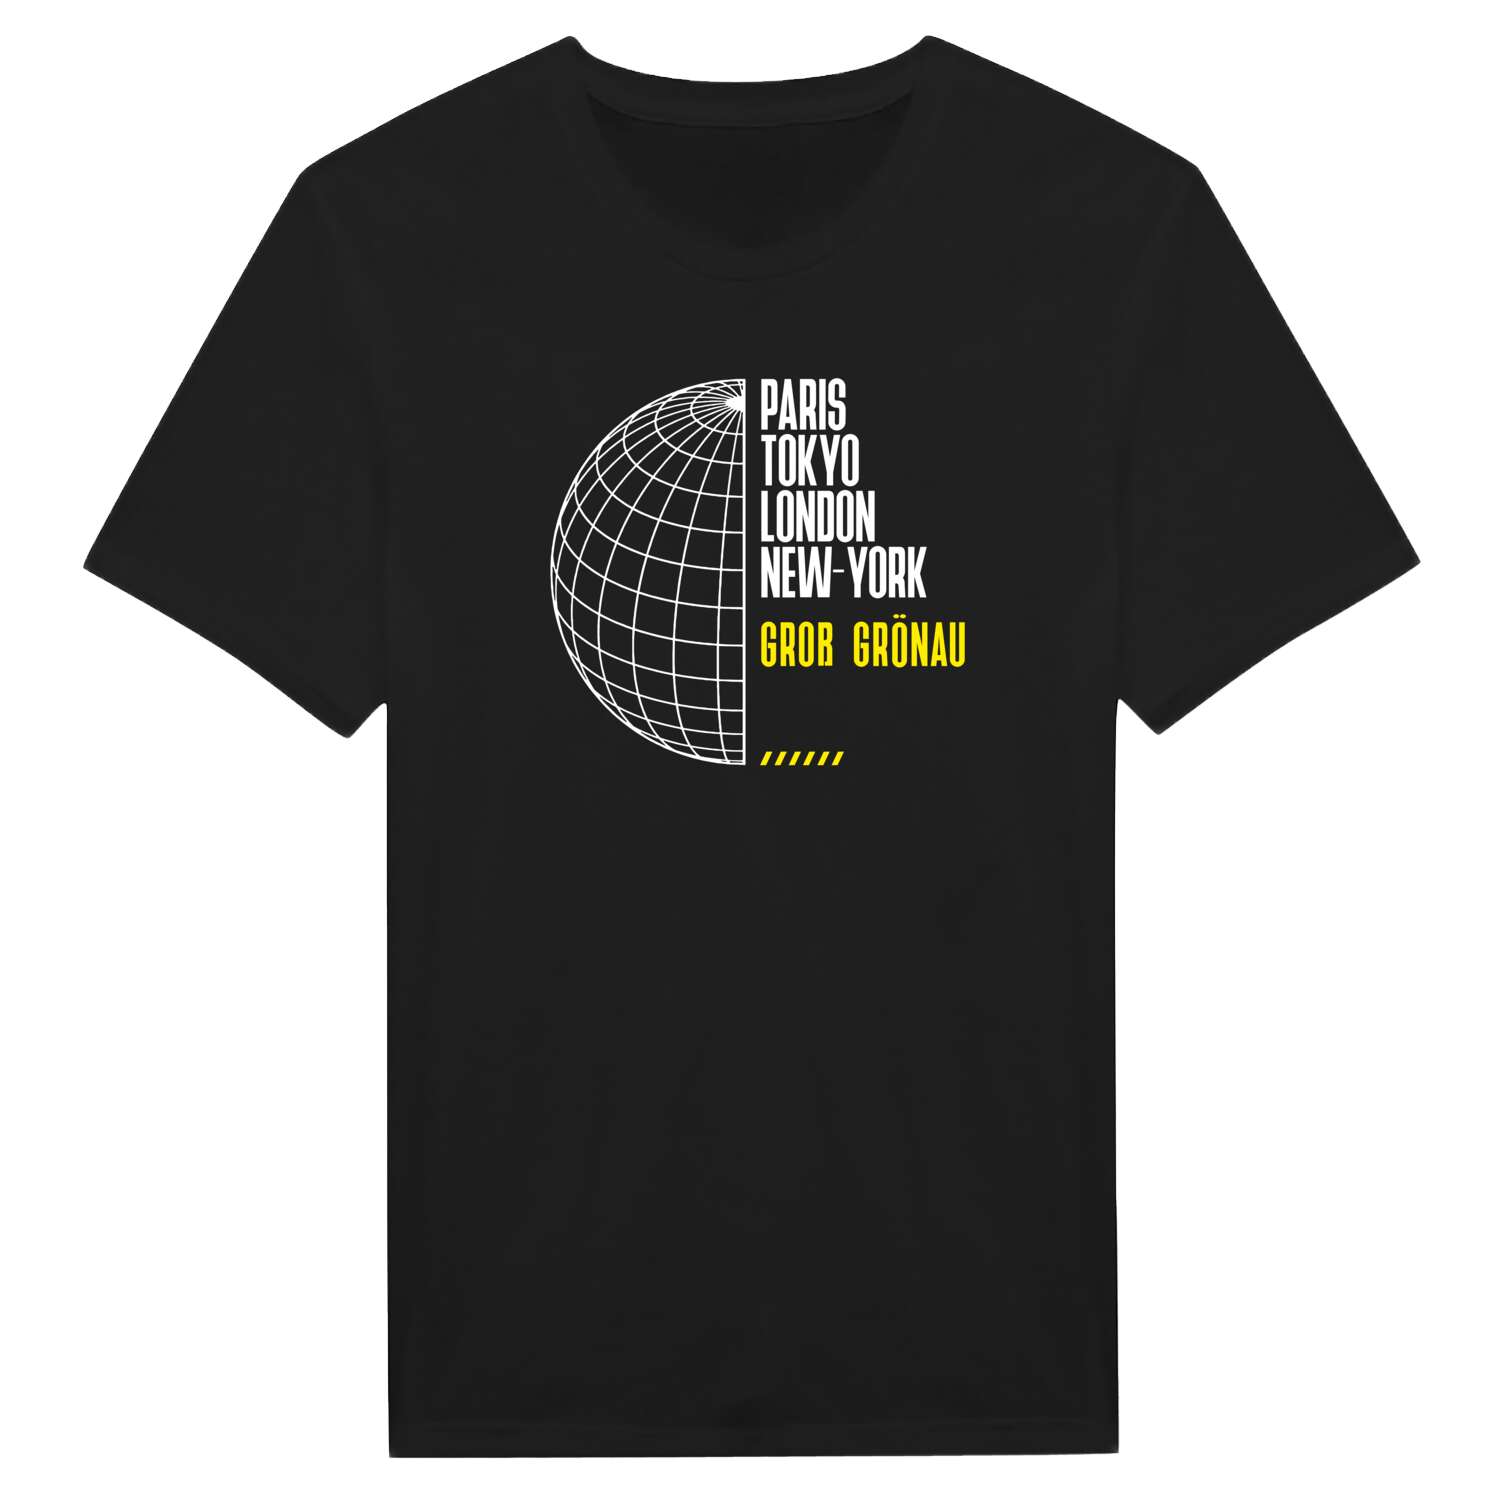 Groß Grönau T-Shirt »Paris Tokyo London«